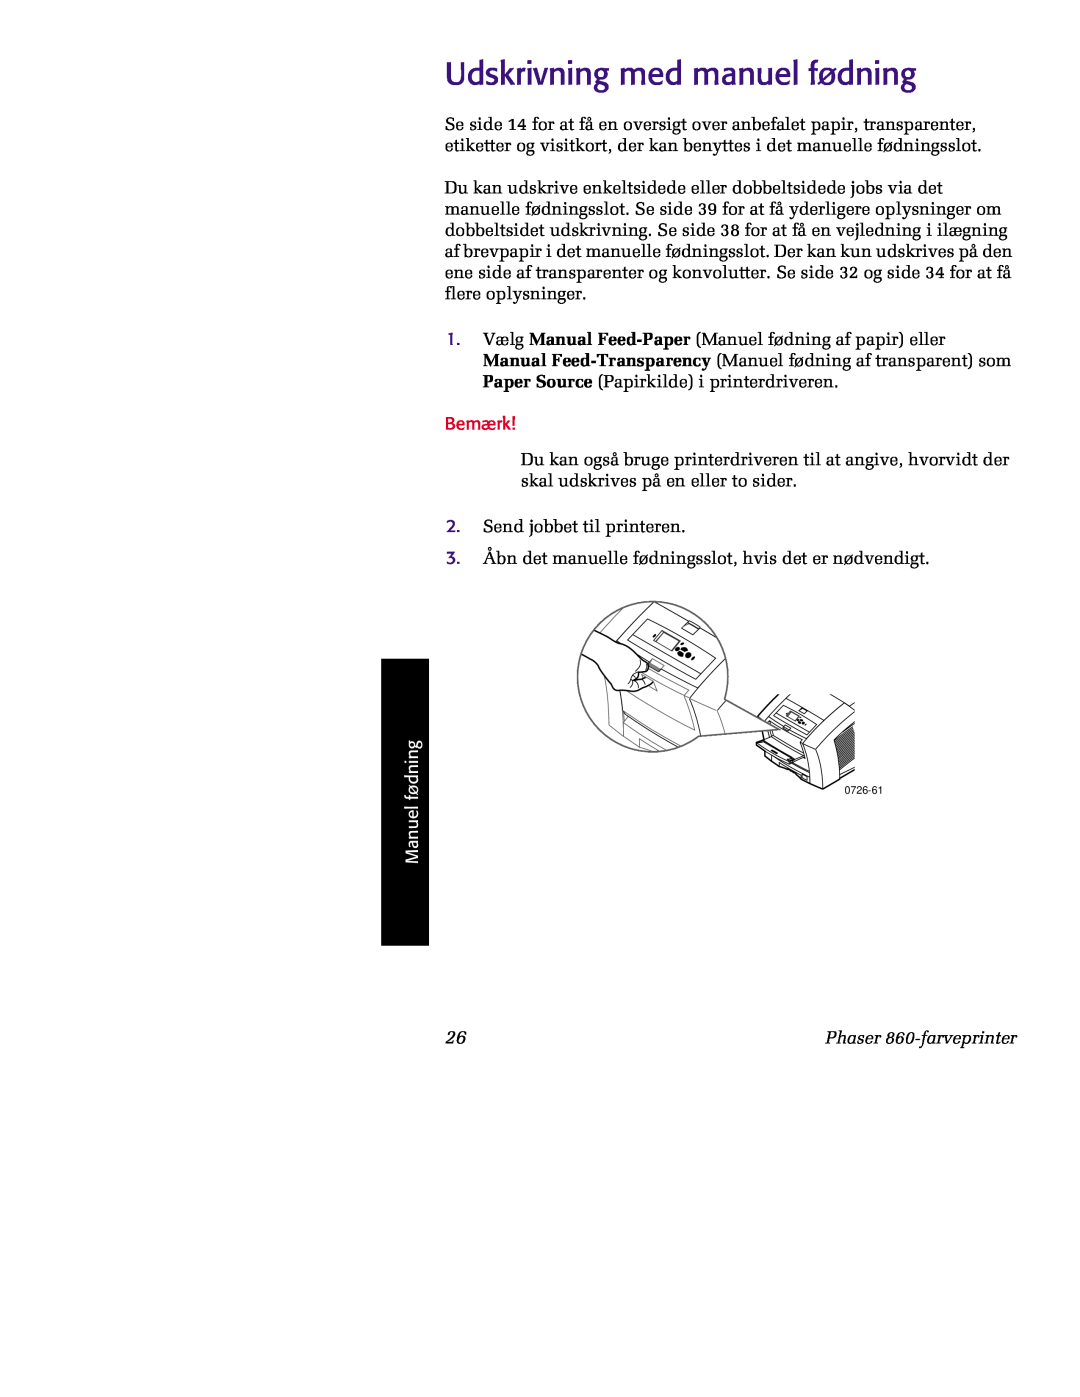 Tektronix manual Udskrivning med manuel fødning, Manuel fødning, Bemærk, Phaser 860-farveprinter 